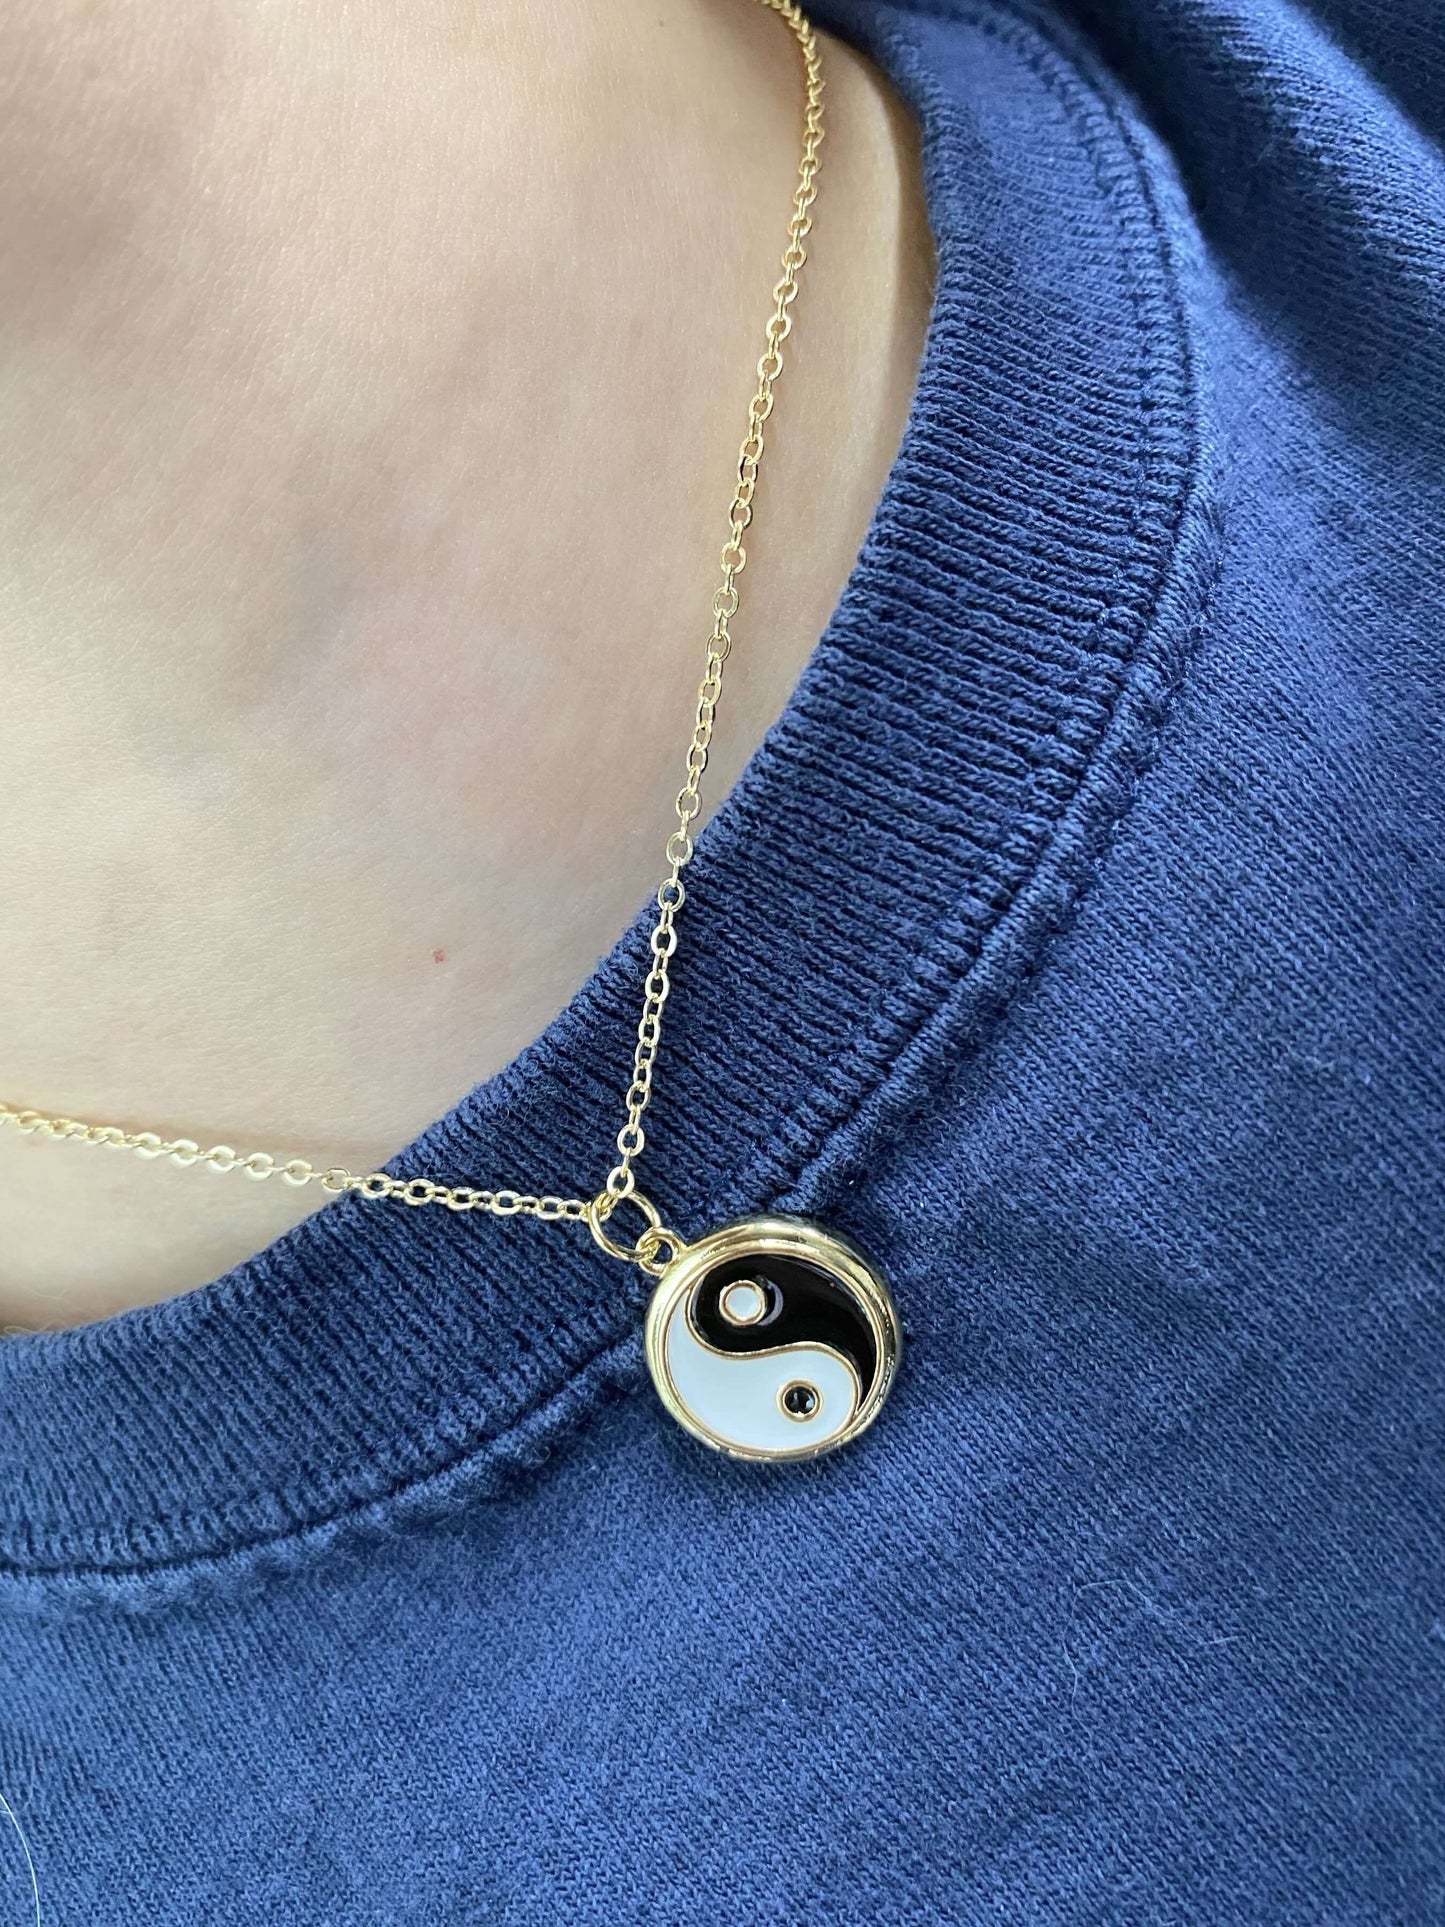 Yin Yang Necklace (14k gold) - Luna Alaska Jewelry